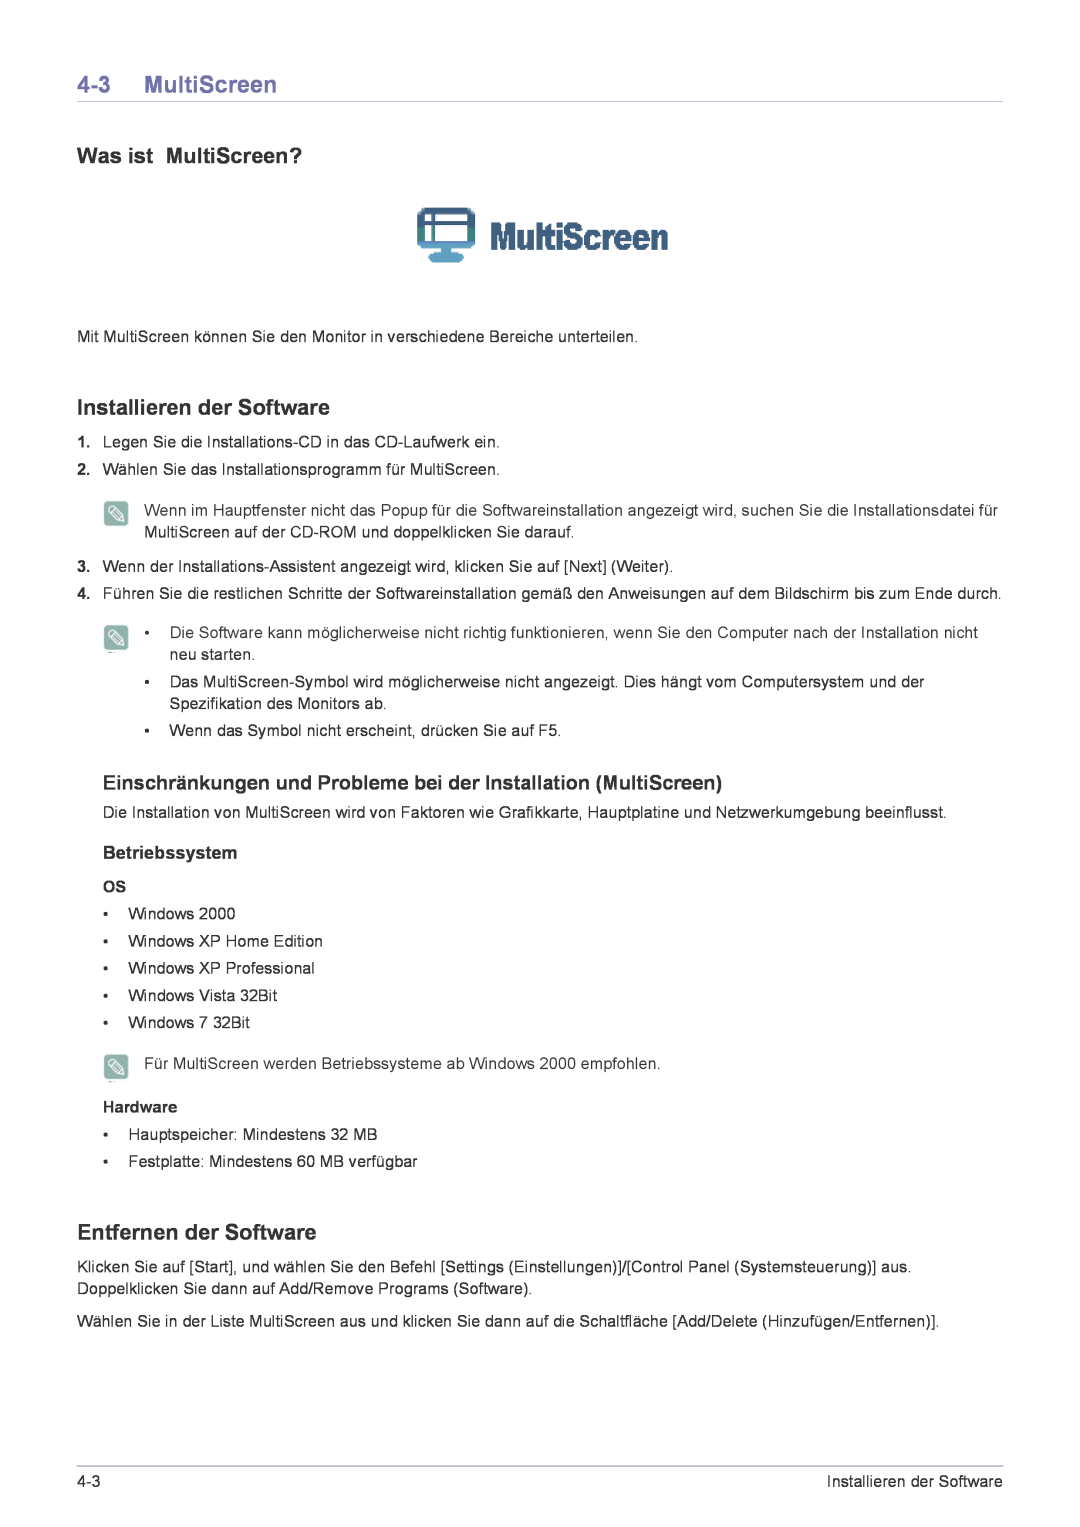 Samsung LF22NPBHBNP/EN manual Was ist MultiScreen?, Installieren der Software, Entfernen der Software, Betriebssystem 